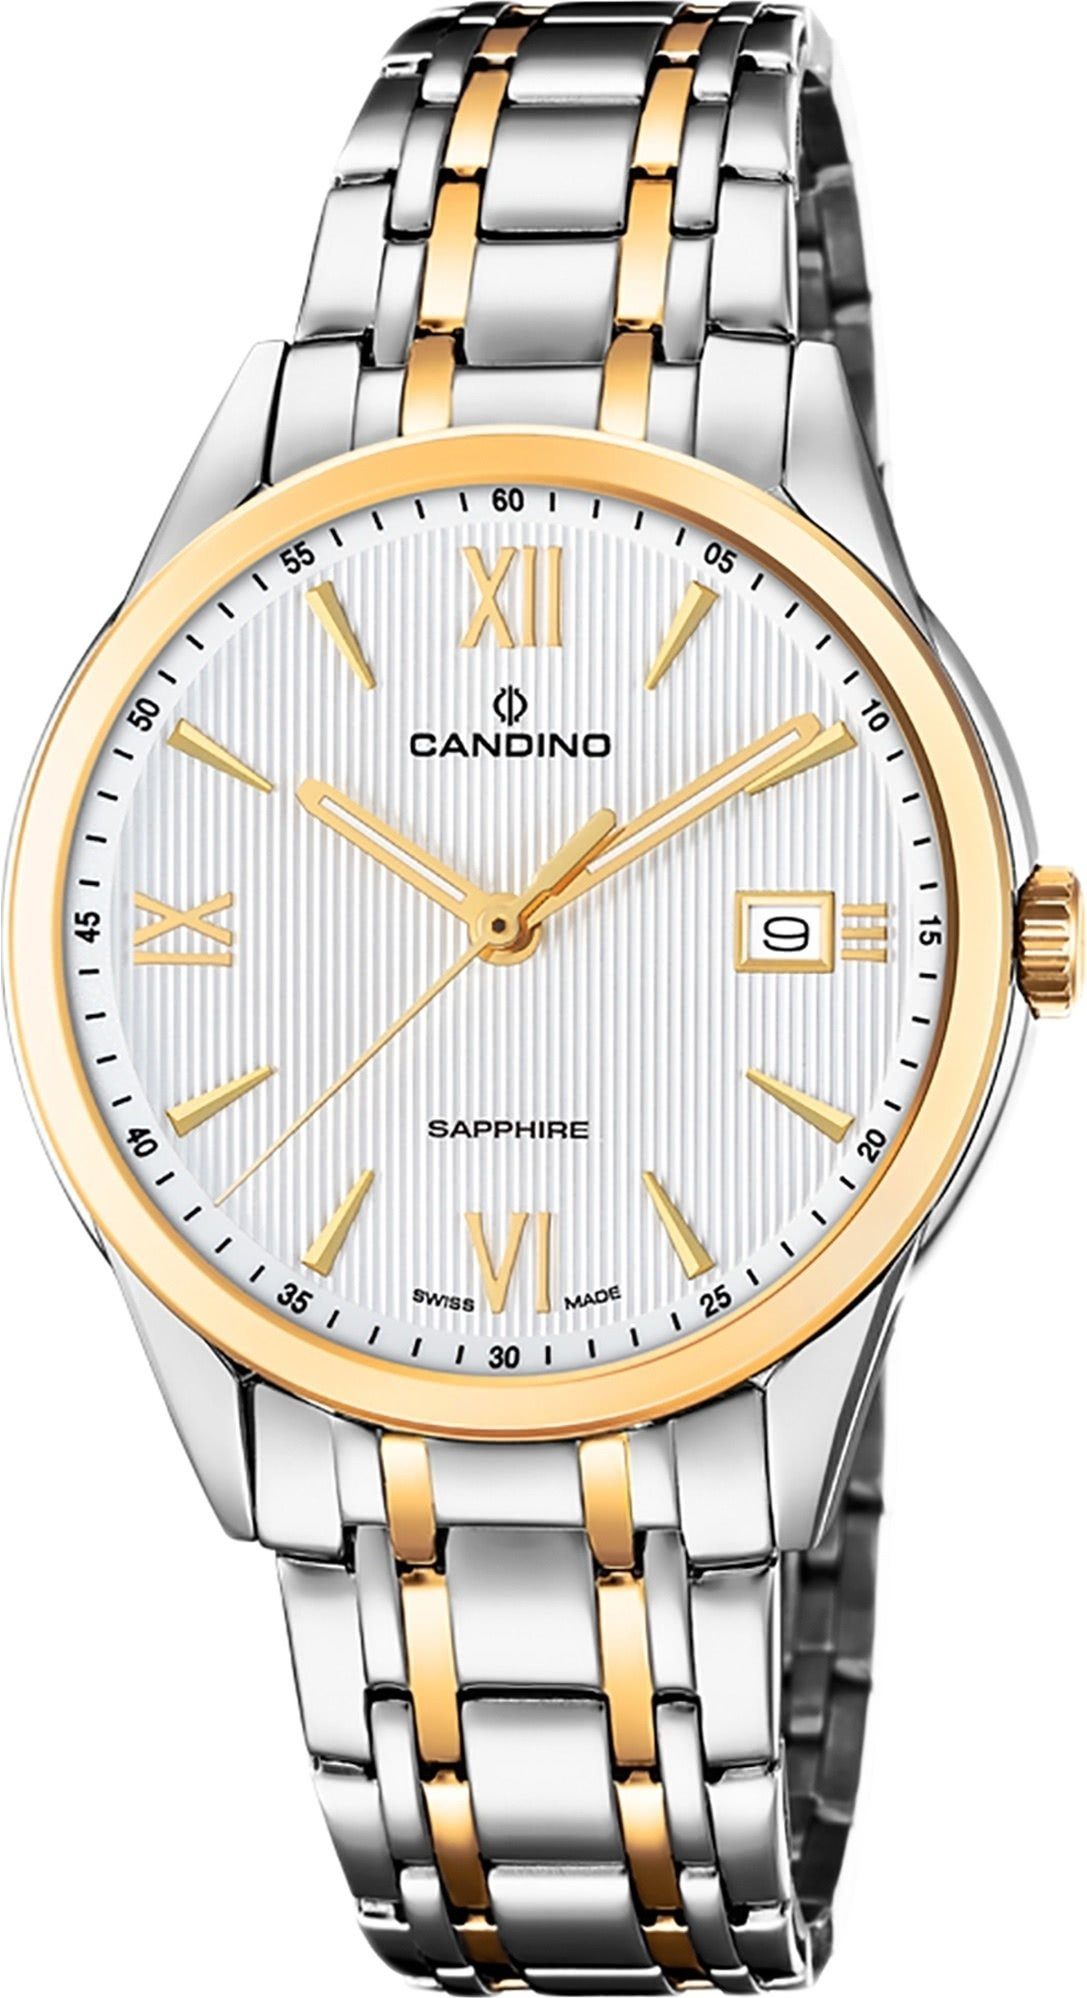 Analog rund, silber, Elegant Uhr Armbanduhr gold, Candino Edelstahlarmband Herren Candino Quarzuhr Herren C4694/1,